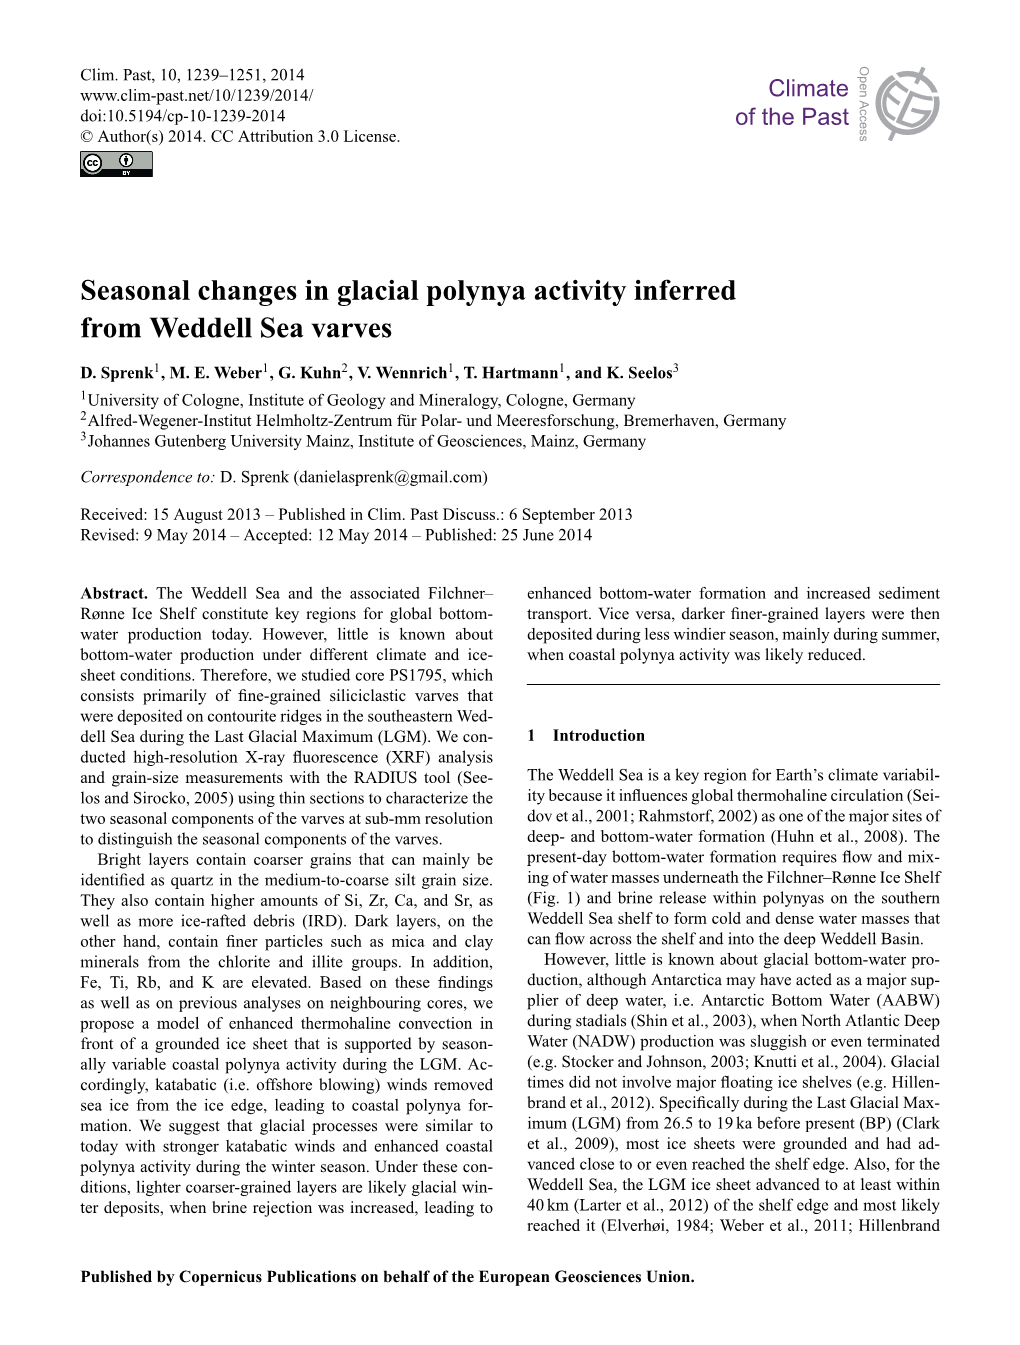 Seasonal Changes in Glacial Polynya Activity Inferred from Weddell Sea Varves